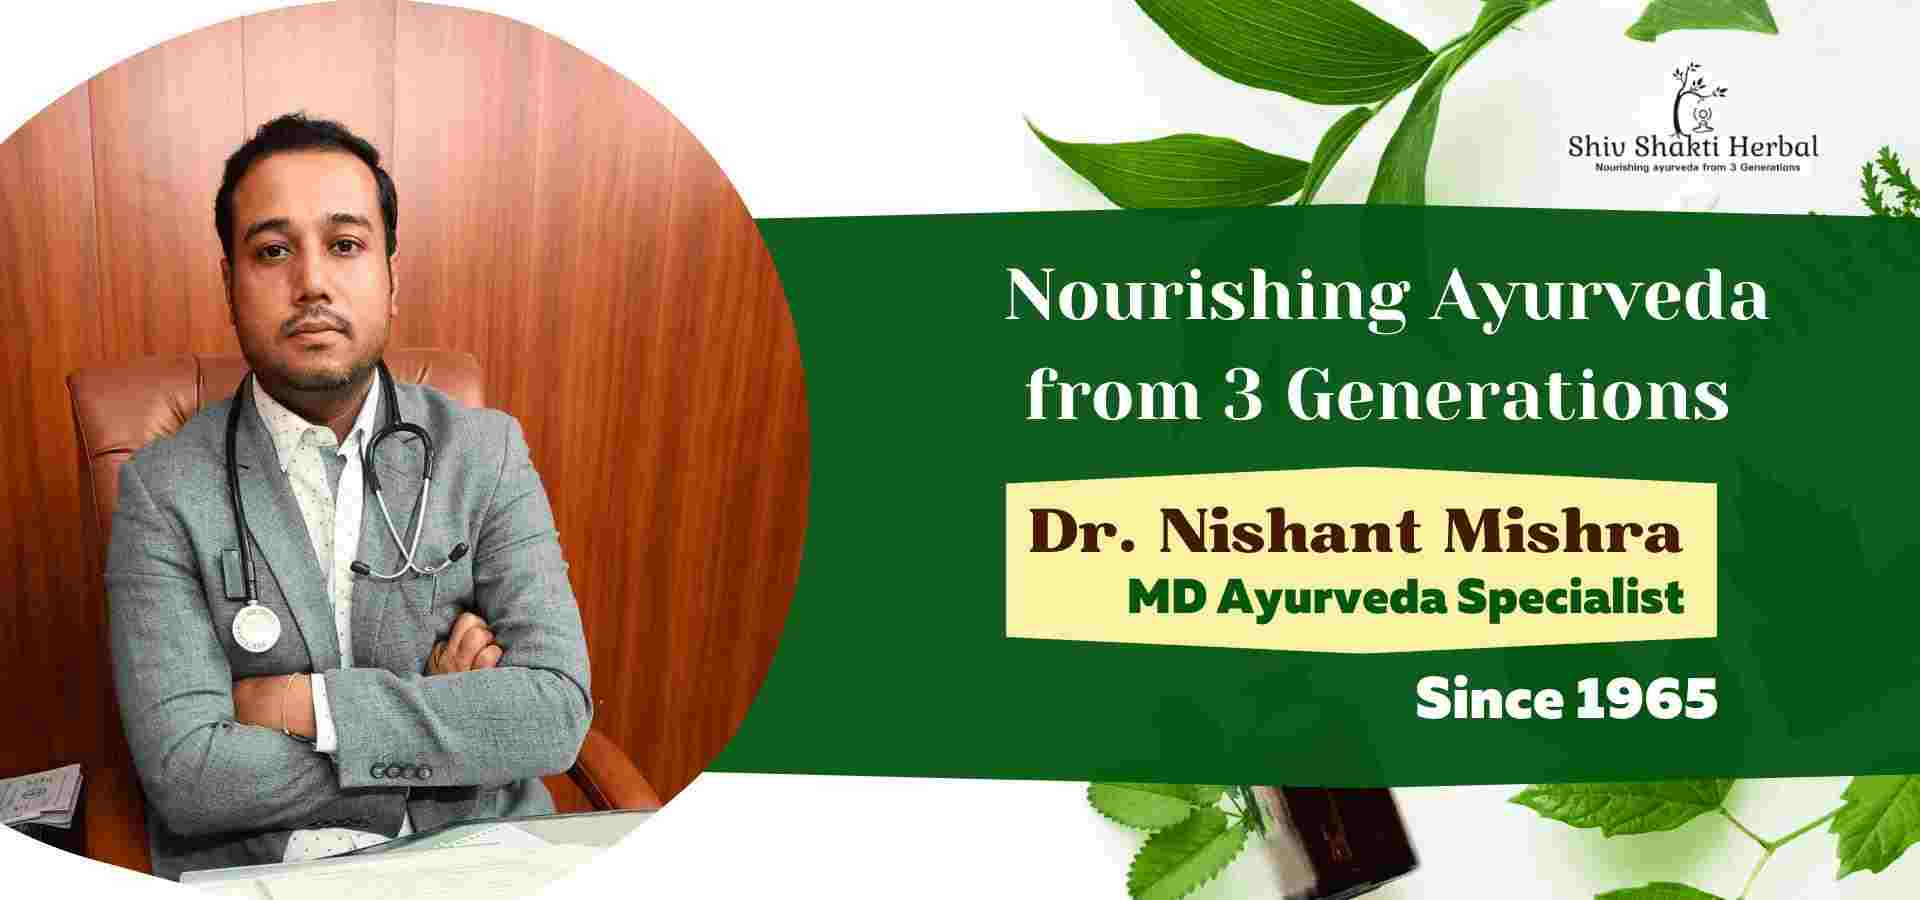 Doctor Nishant Mishra Dr. Nishant Mishra